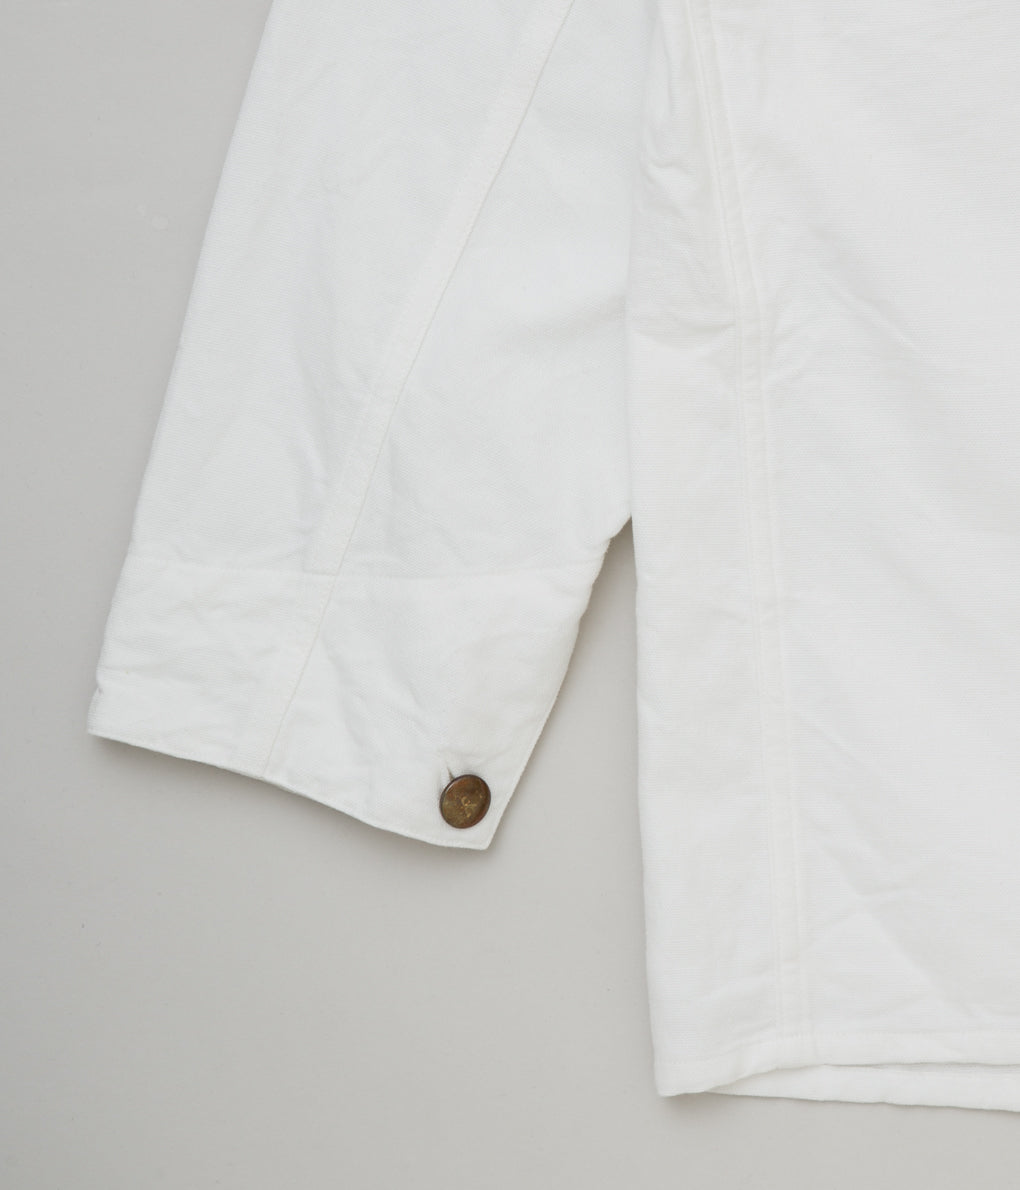 COMOLI "화이트 1938 재킷"(WHITE)